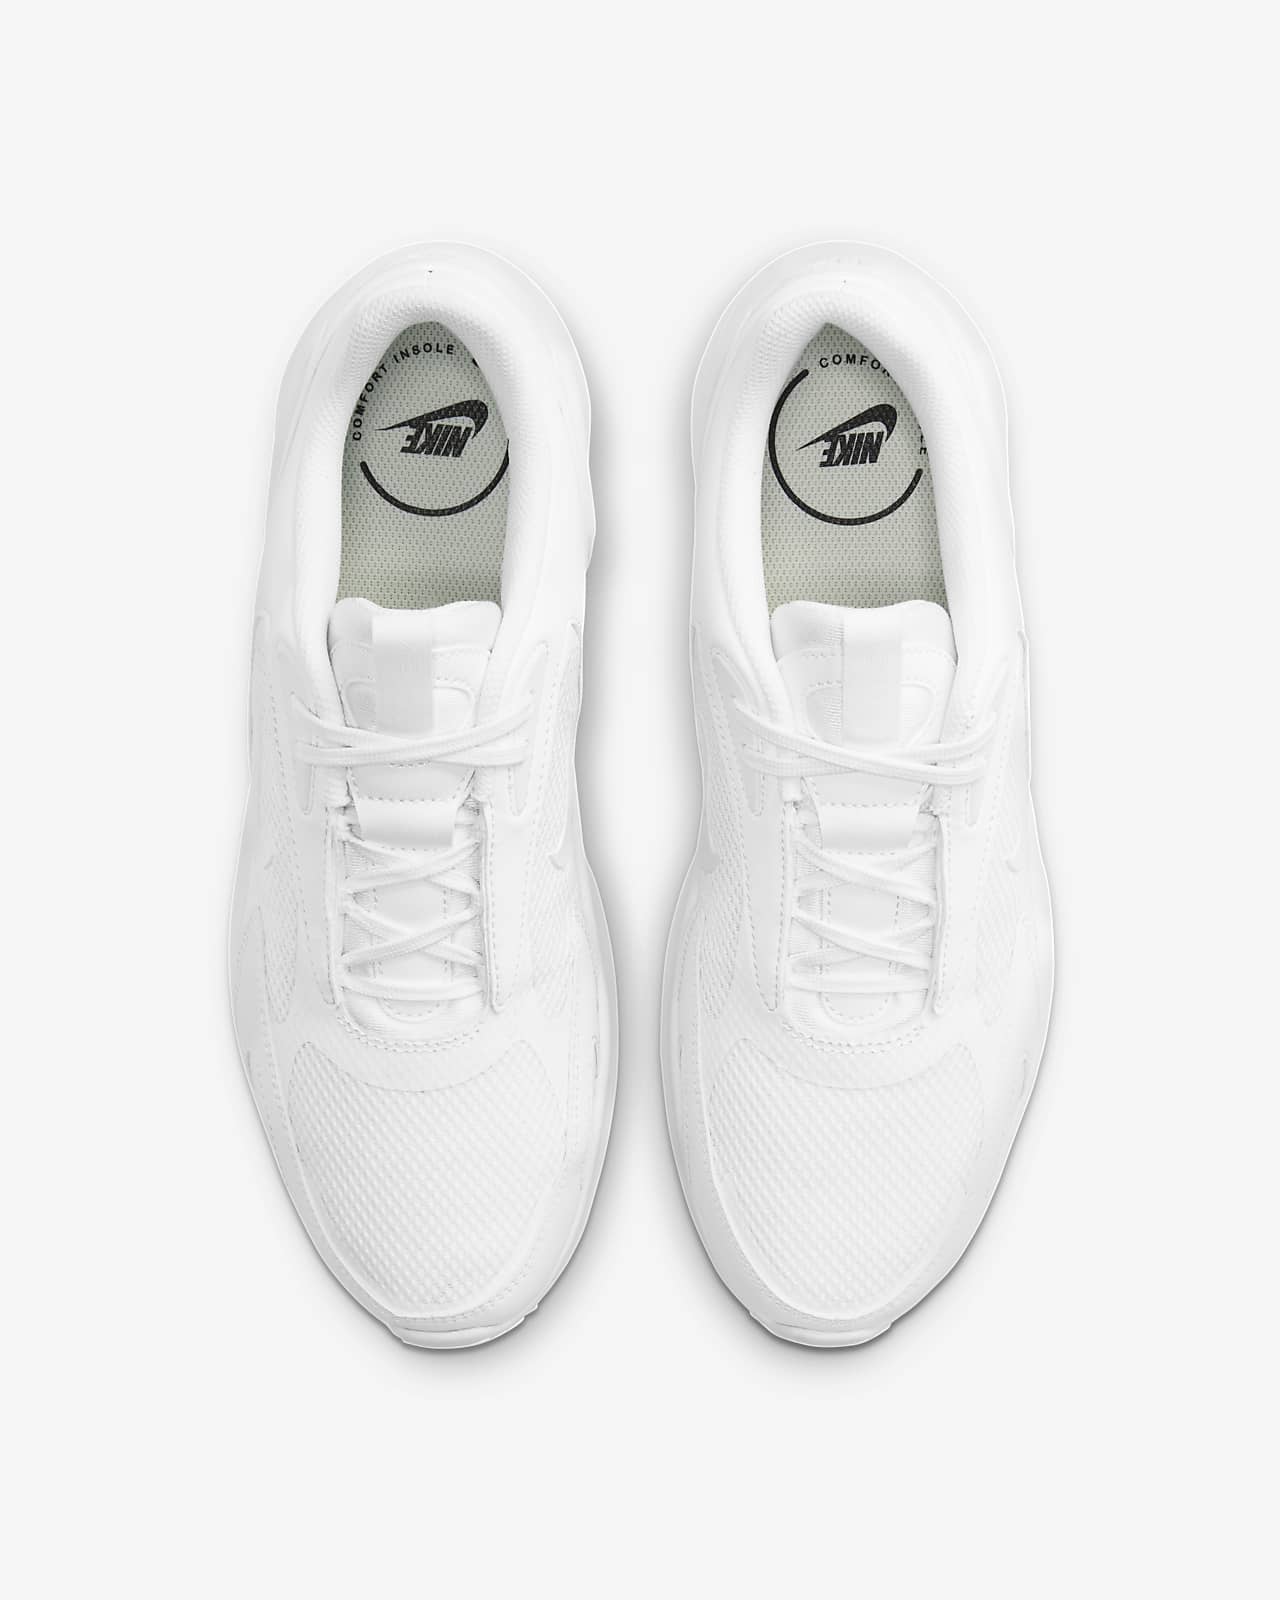 Nike Air Max Bolt Men's Shoes